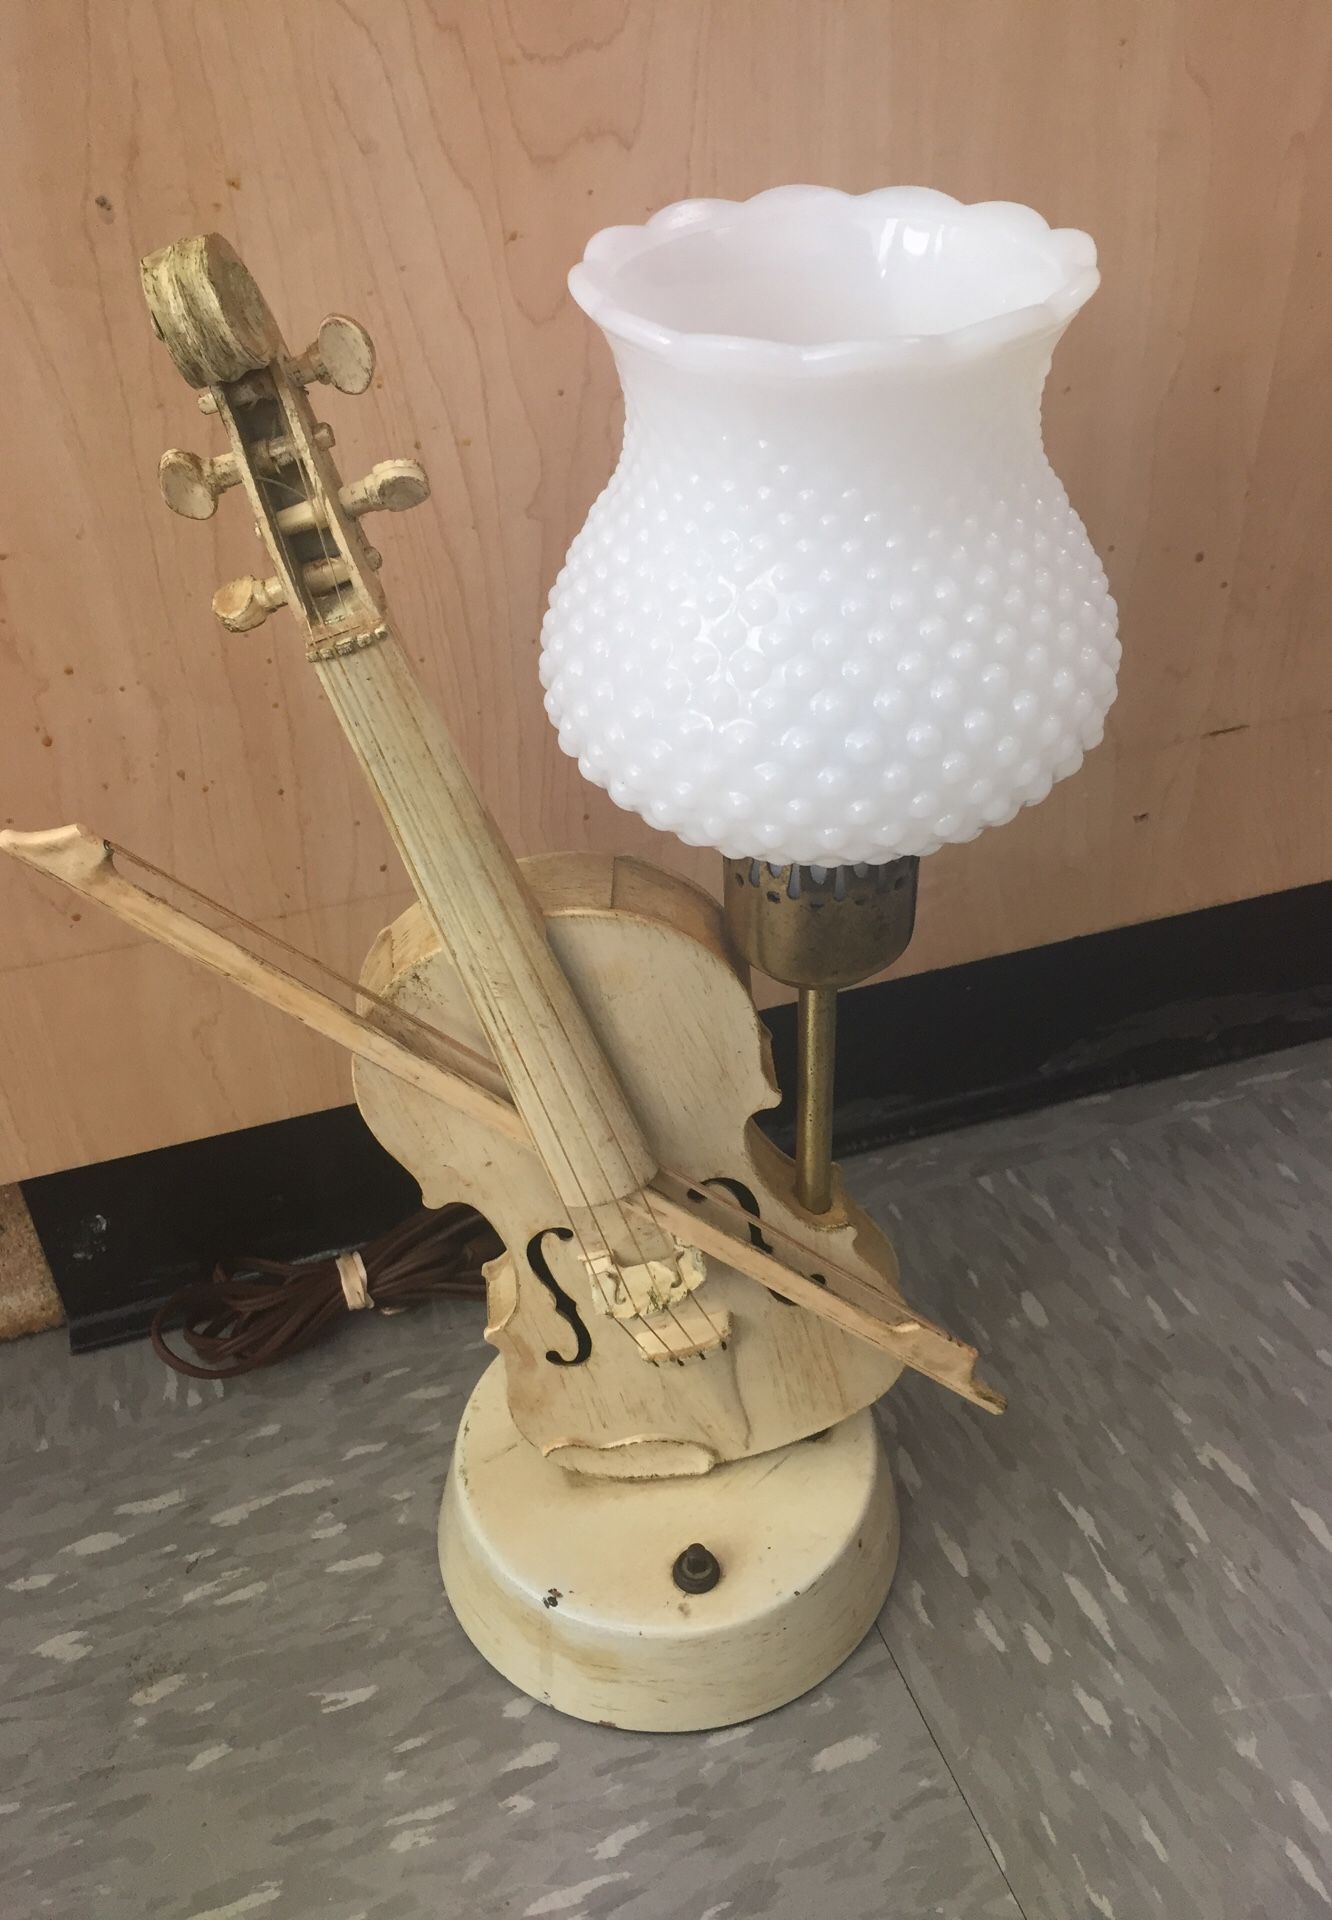 Each Vintage 1940's Violin Lamp mid century modern musical instrument milk glass shade 16" high